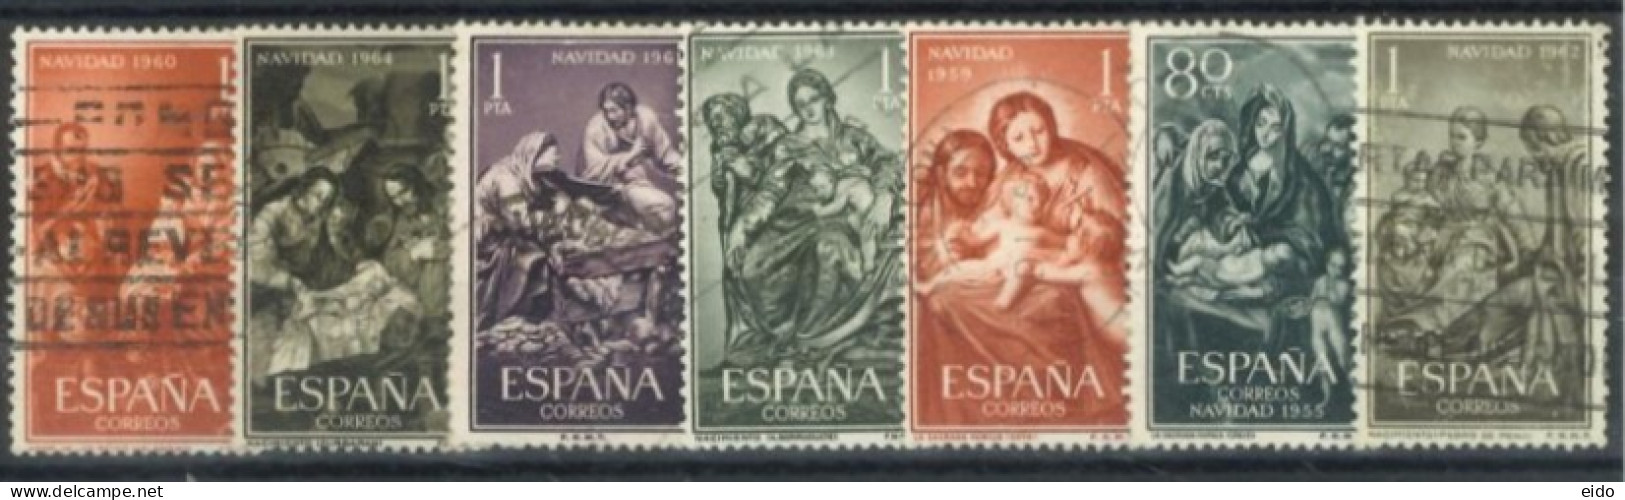 SPAIN, 1955/63, VIRGINS STAMPS SET OF 7, USED. - Used Stamps